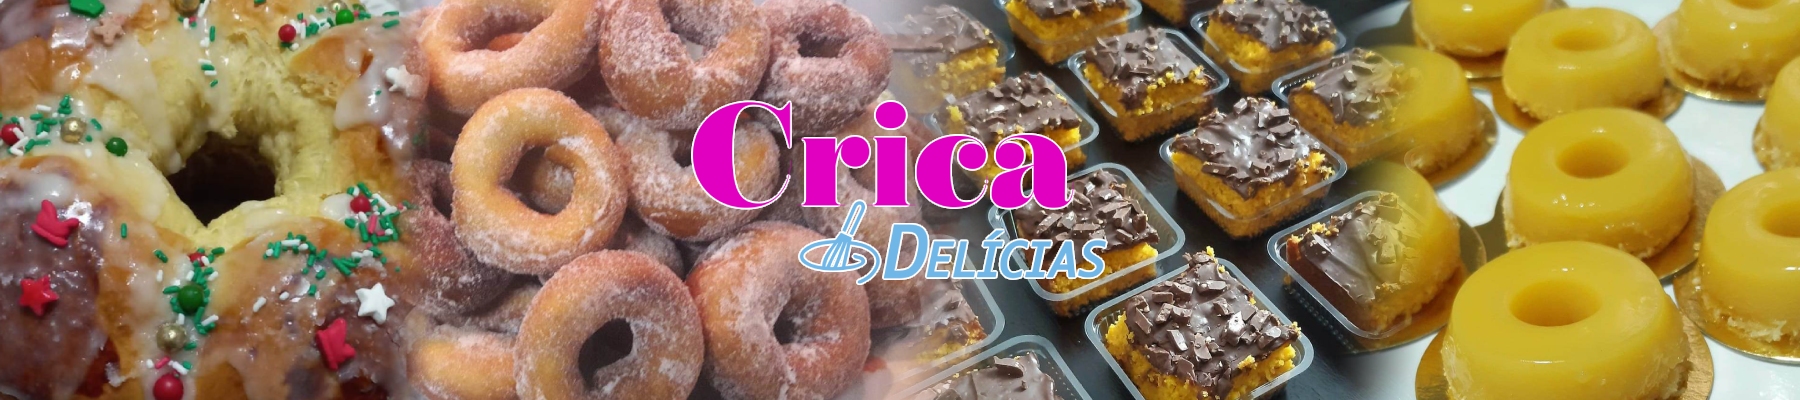 header-crica-delicias-banner